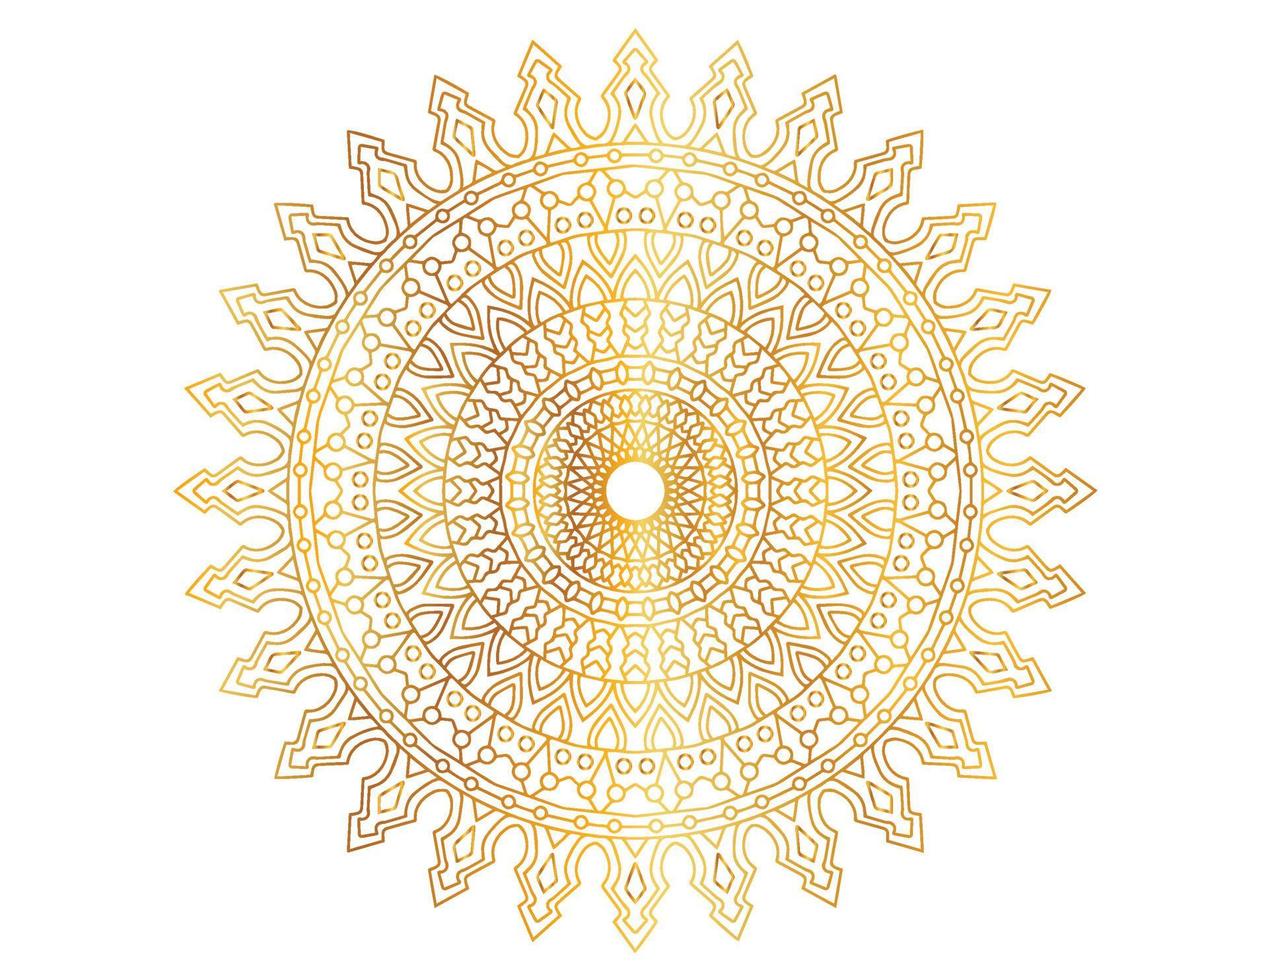 Golden gradient mandala design with royal art vector